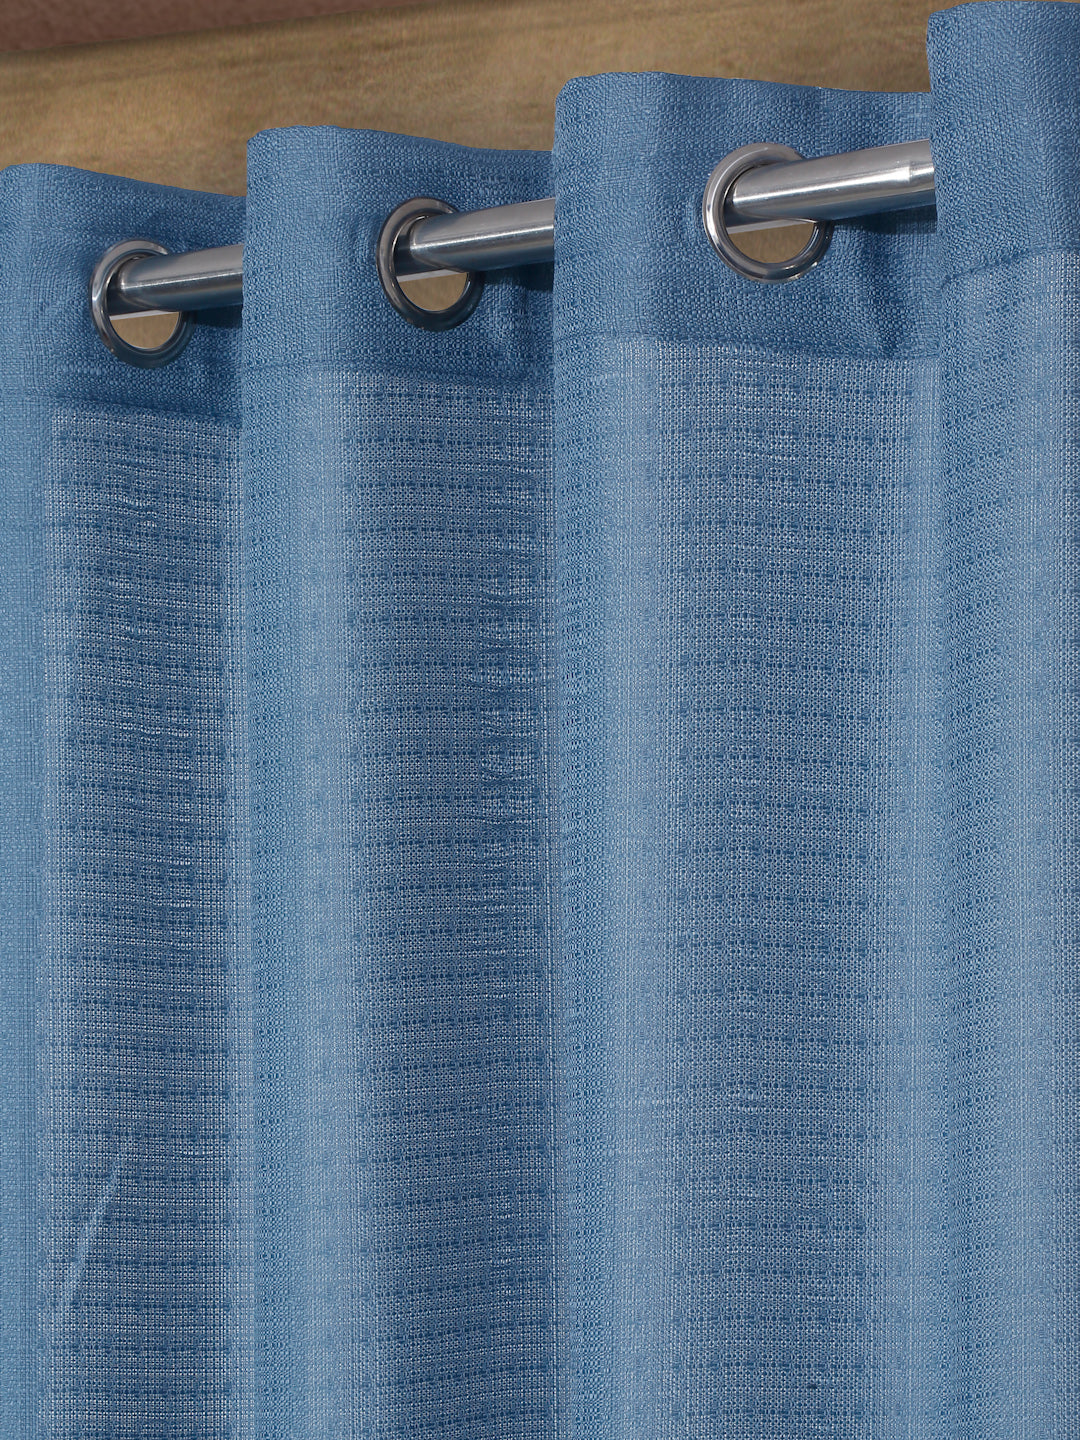 Semi-Transparent Curtains Set of 4- Blue